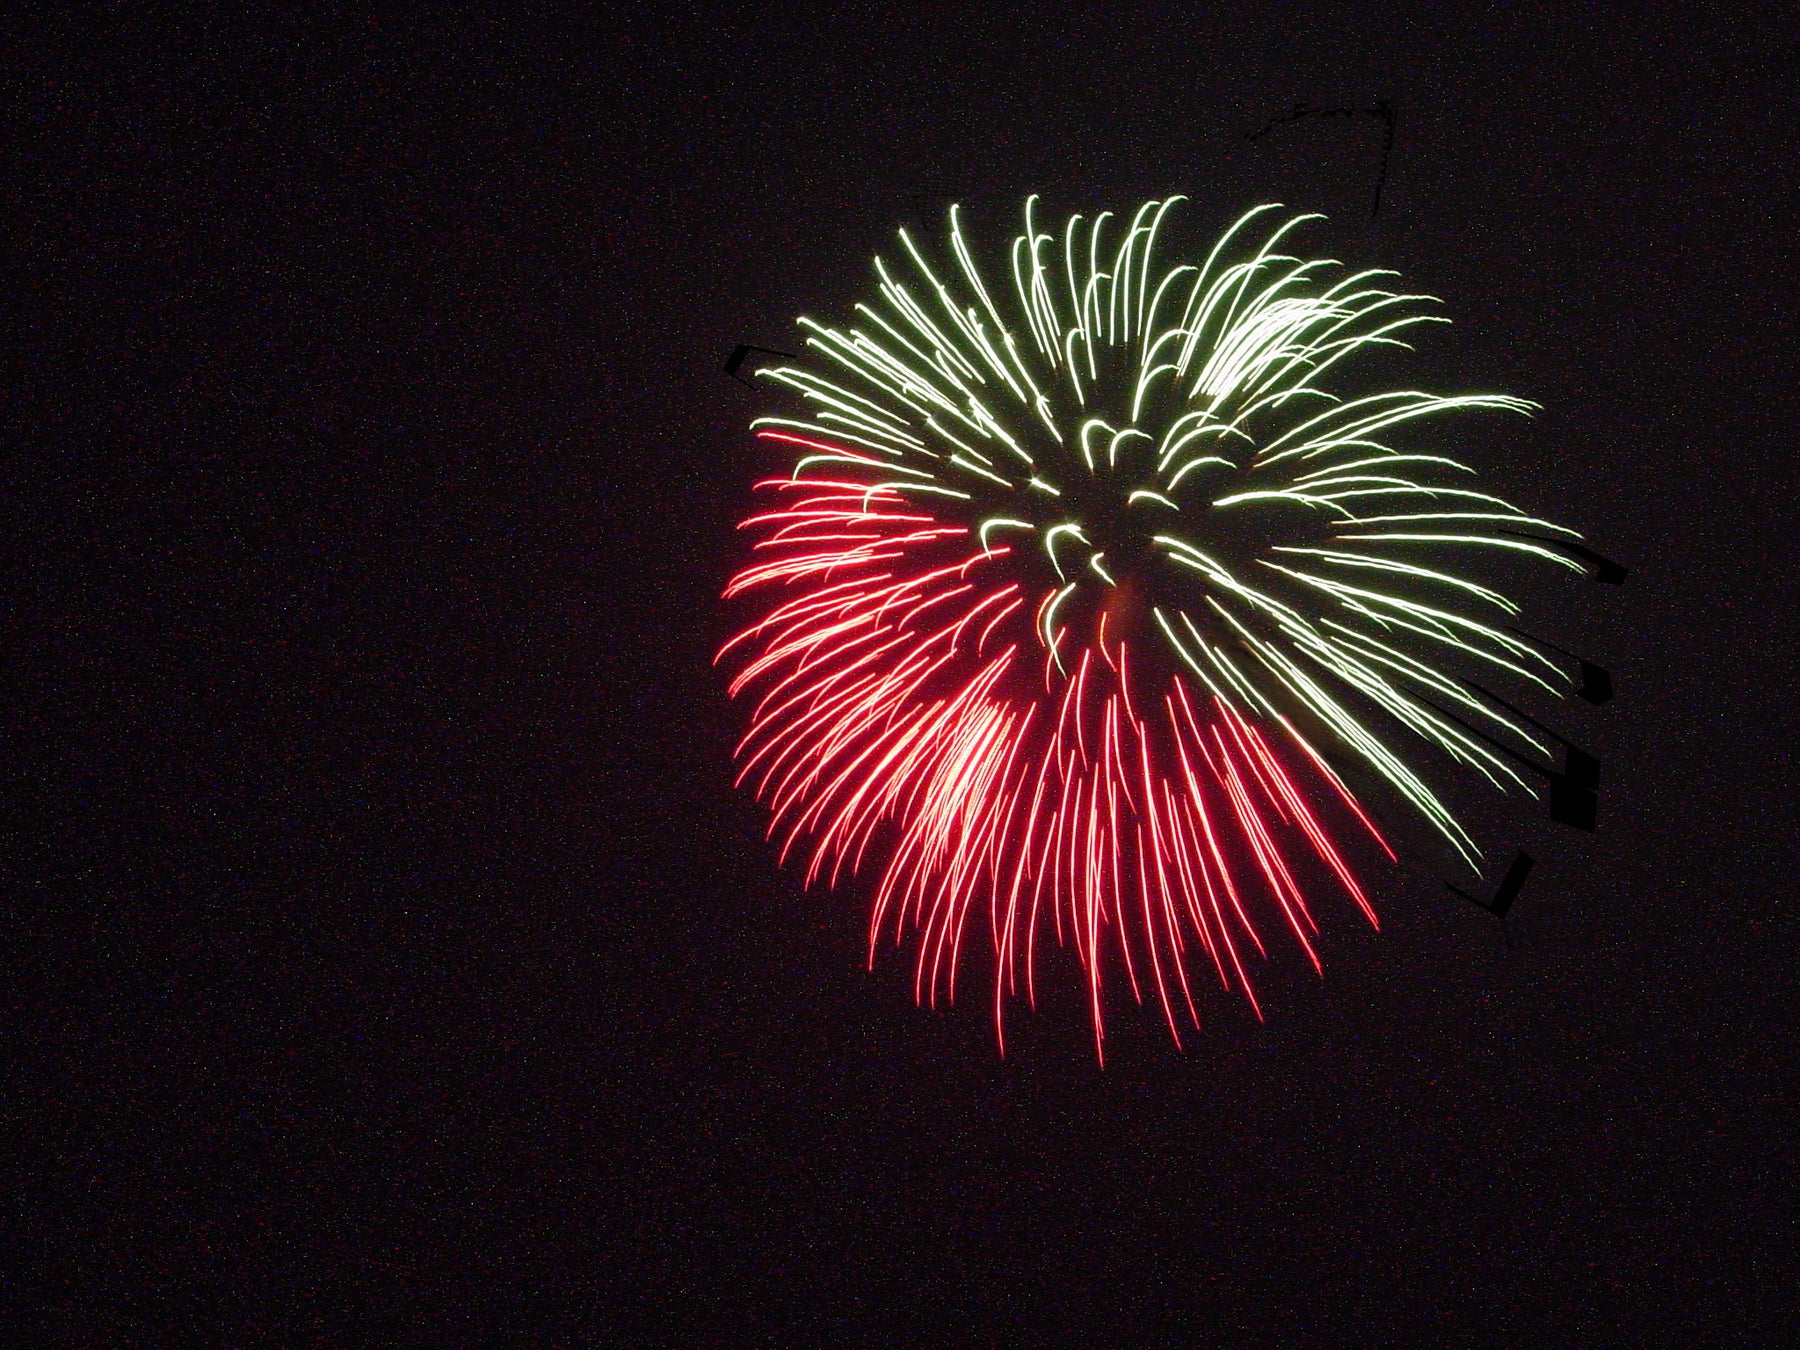 Putrajaya International Fireworks Competition